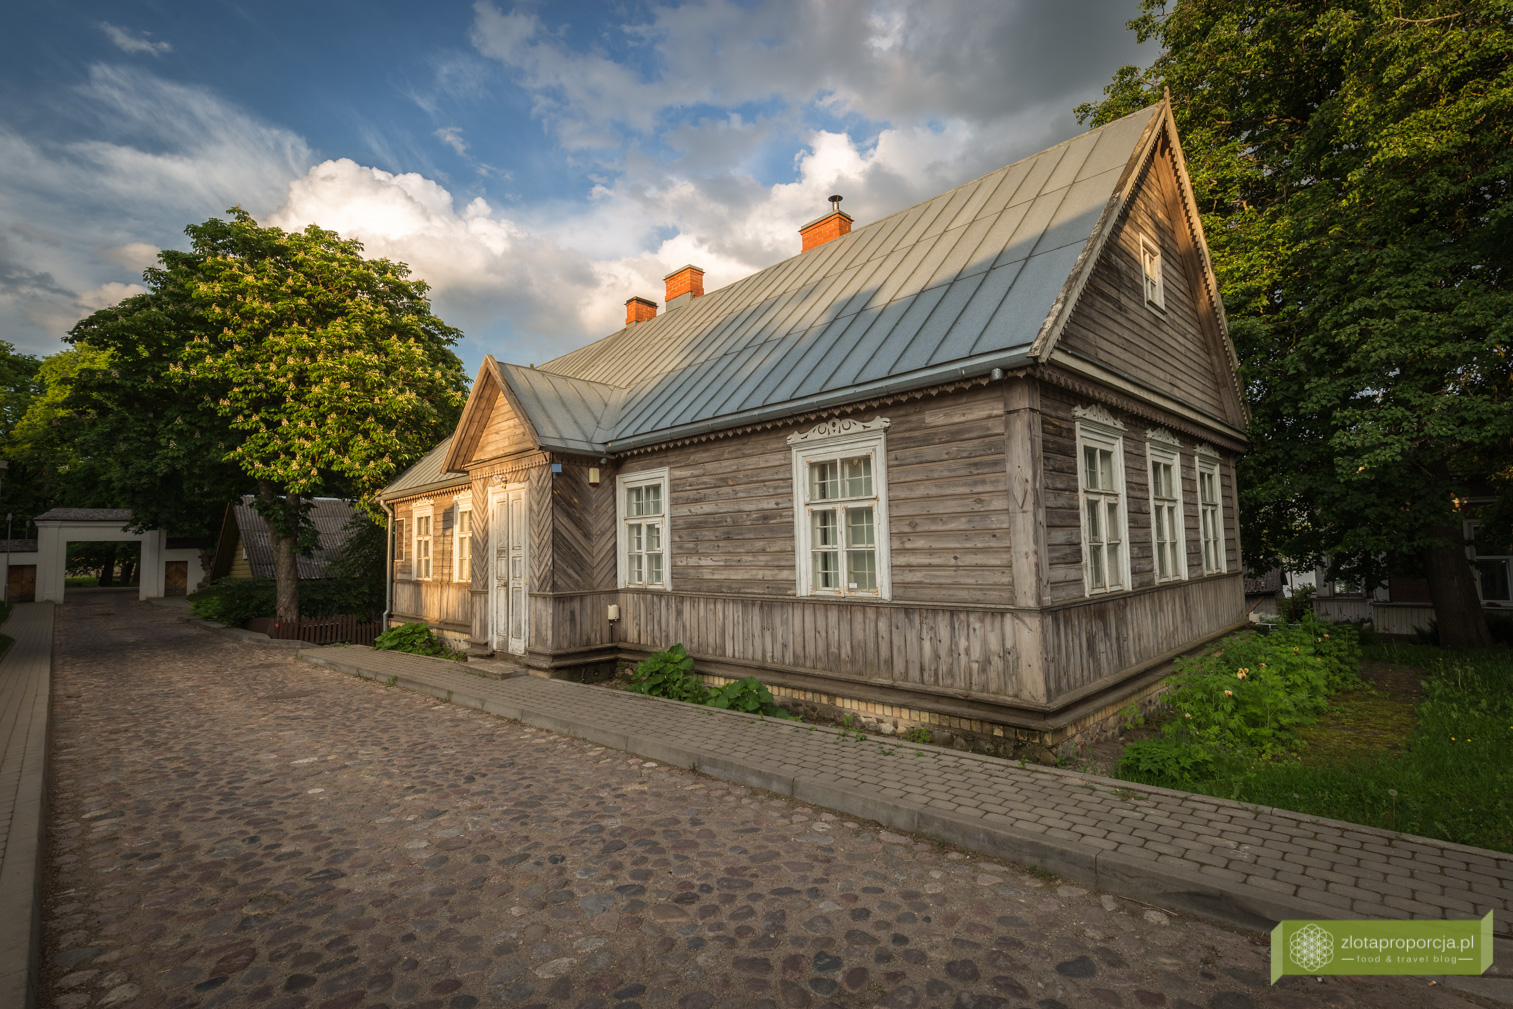 Karaimska chata, Karaimi, Troki, okolice Wilna, Litwa, atrakcje Litwy